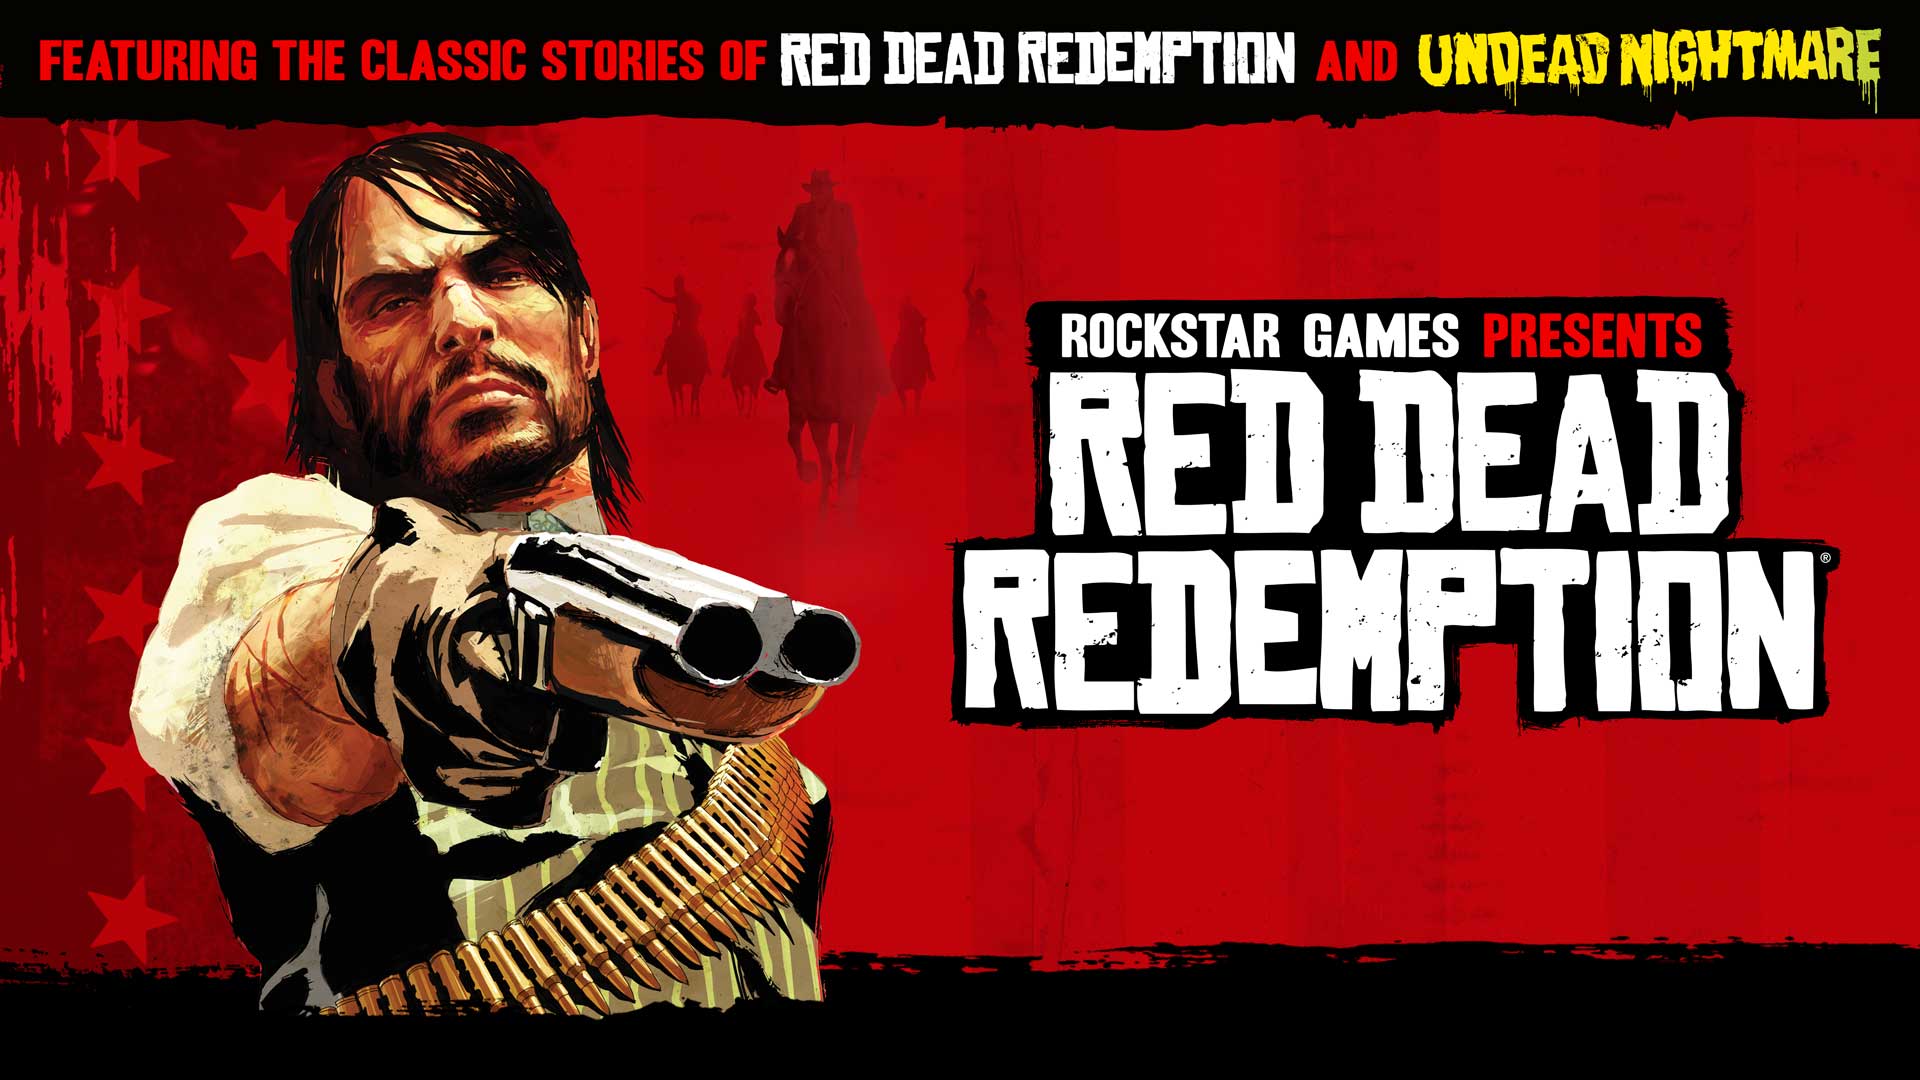 Settlers underjordisk Værdiløs Red Dead Redemption coming to PS4, Switch on August 17 - Gematsu